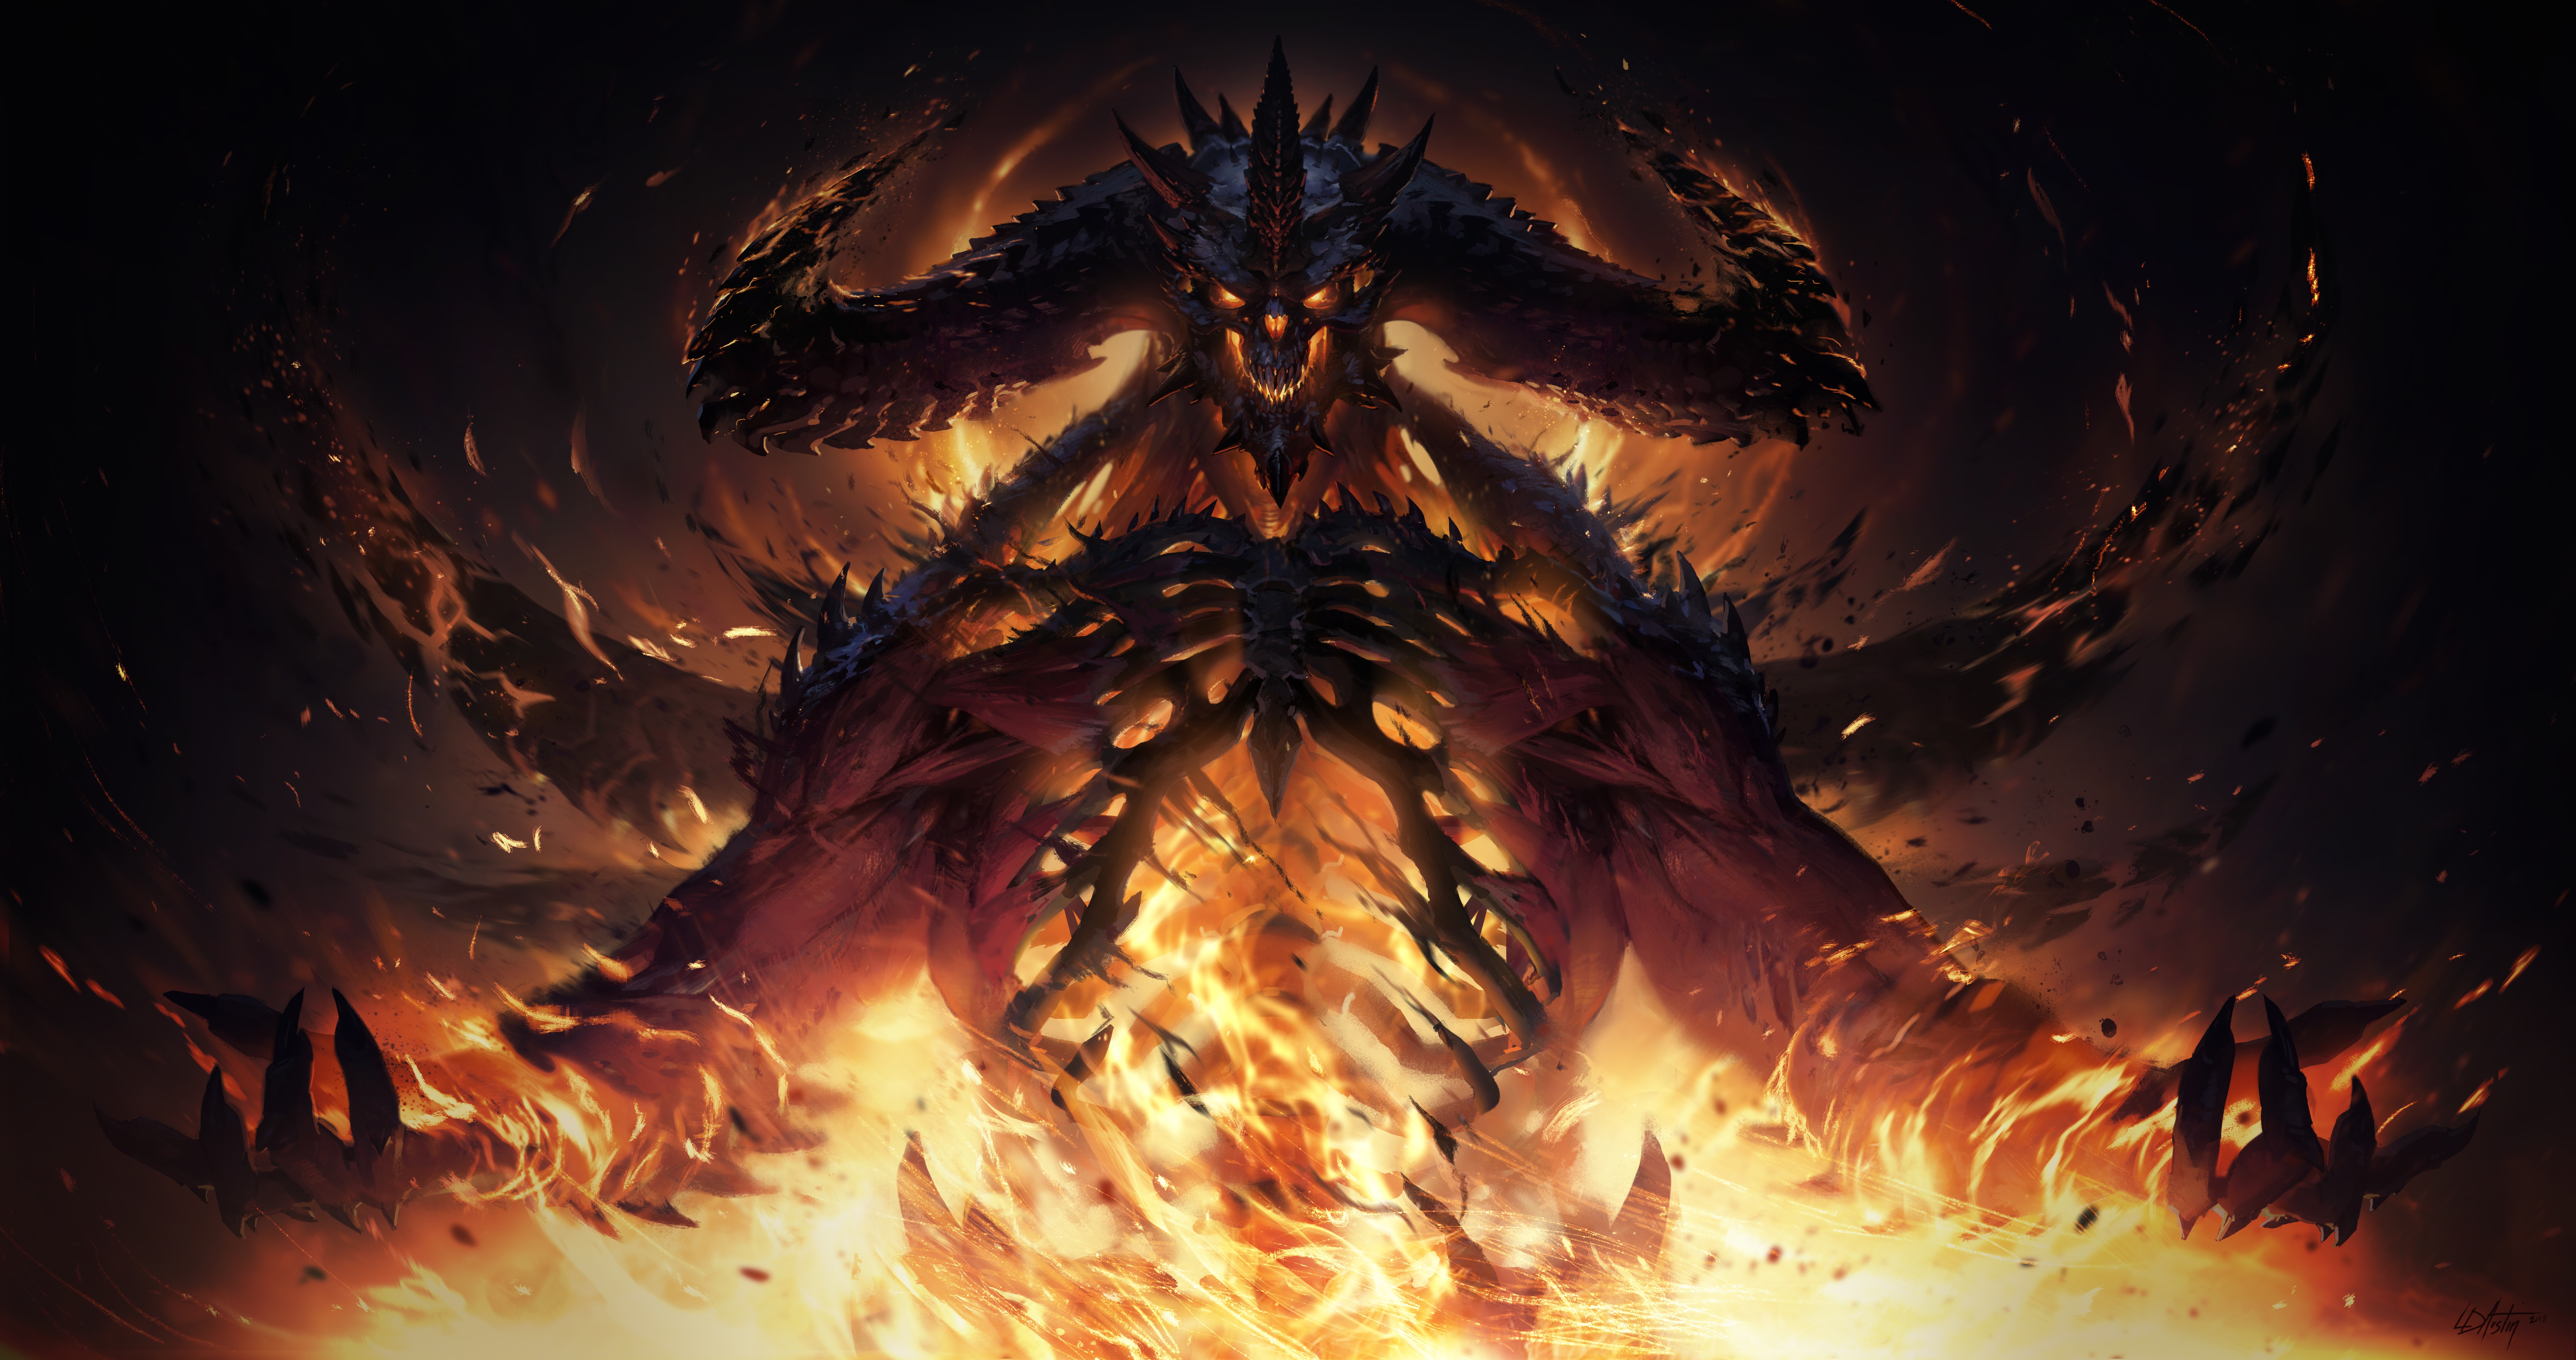 Diablo Diablo Immortal Blizzard Entertainment Video Game Art 10000x5278